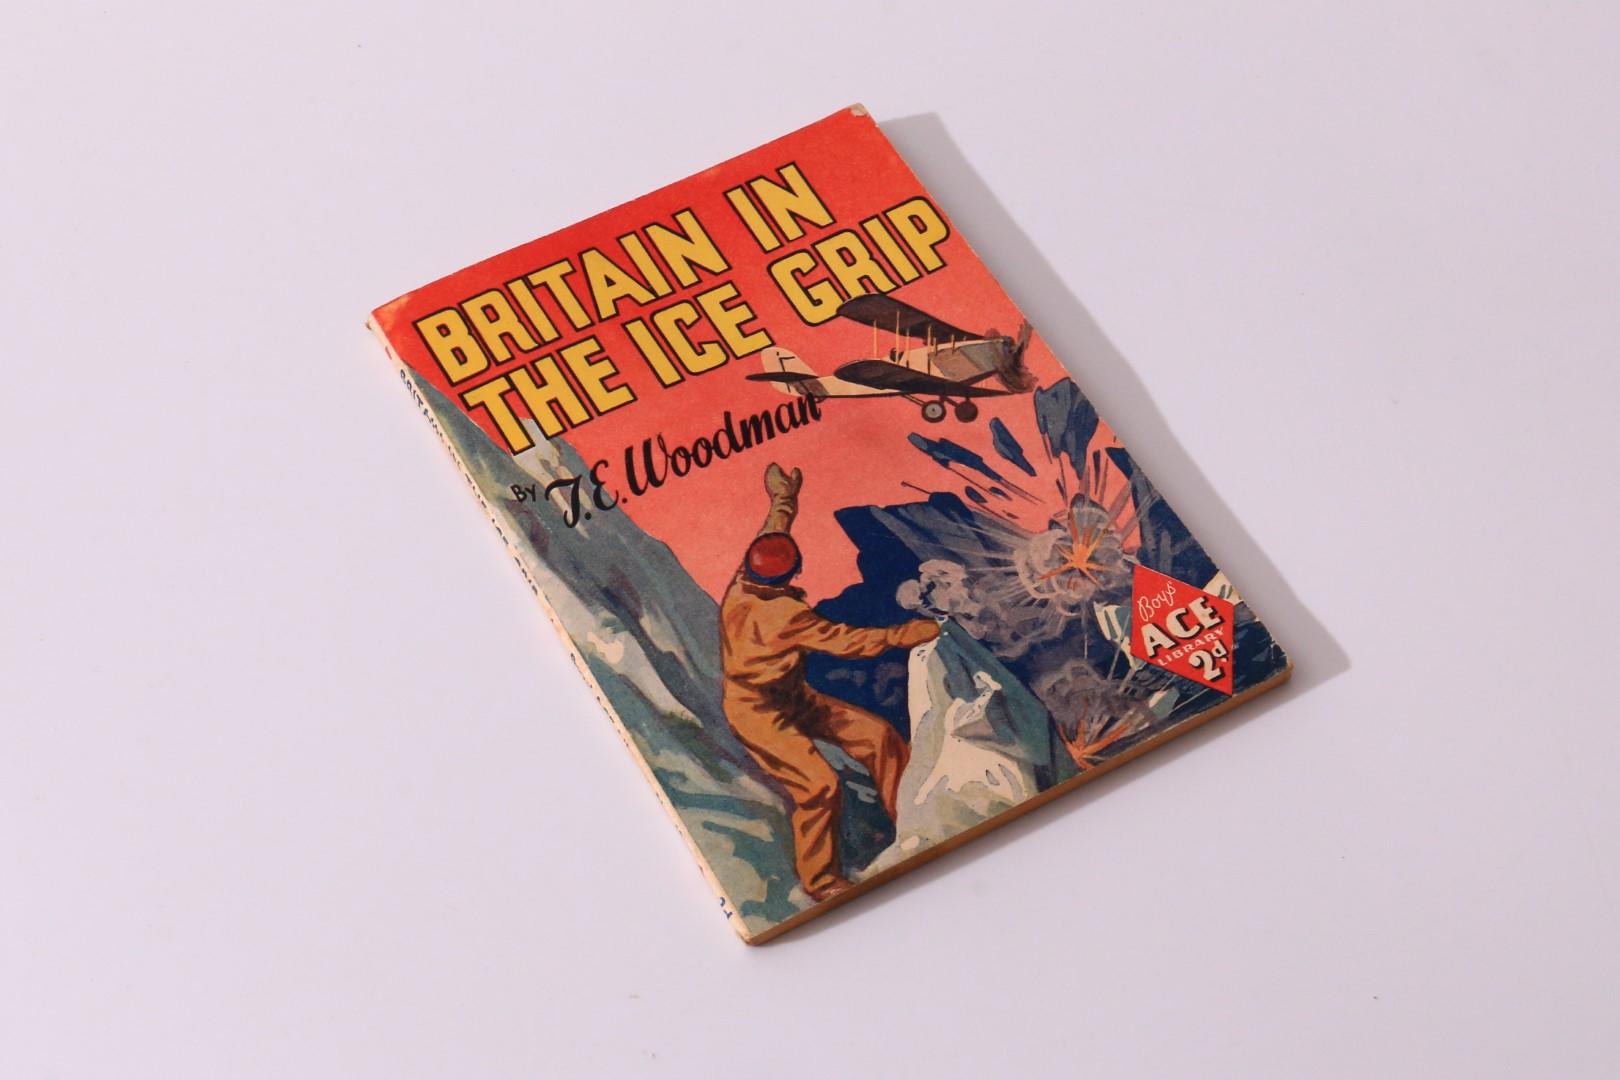 T.E. Woodman - Britain in the Ice Grip - Arthur Pearson, n.d. [1937], First Edition.